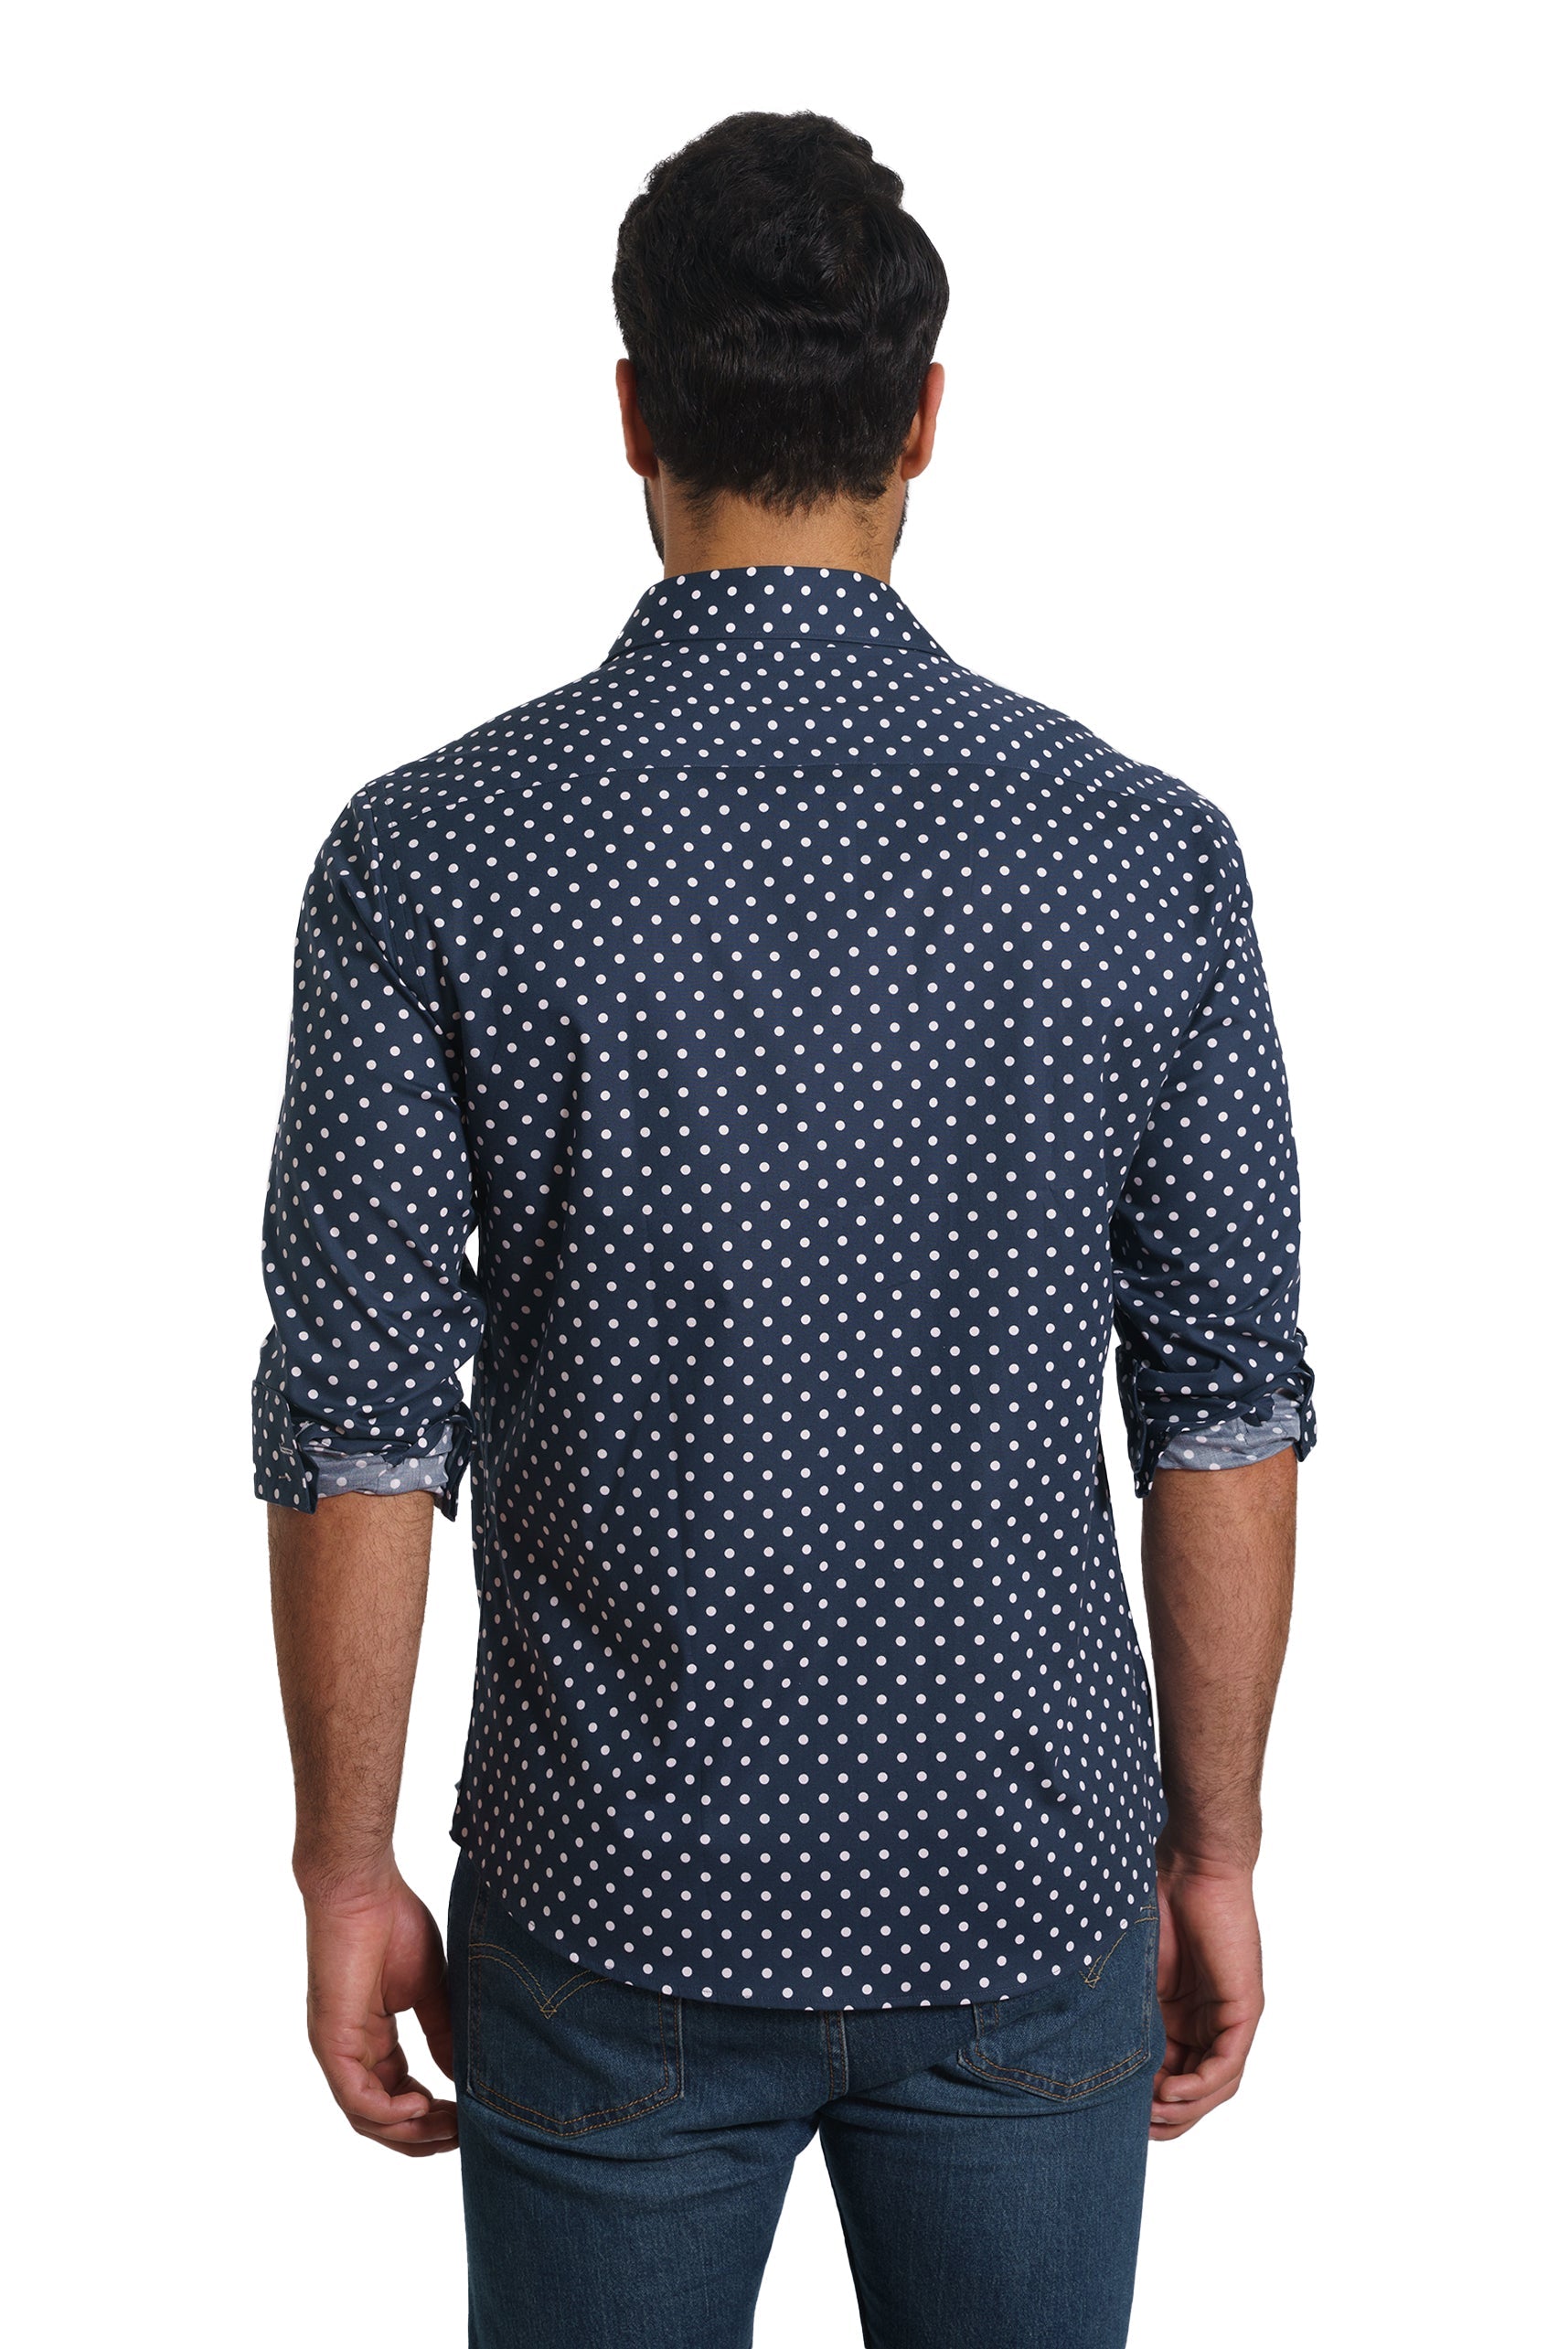 Dark Navy Polka Dots Long Sleeve Shirt TH-2852 Back